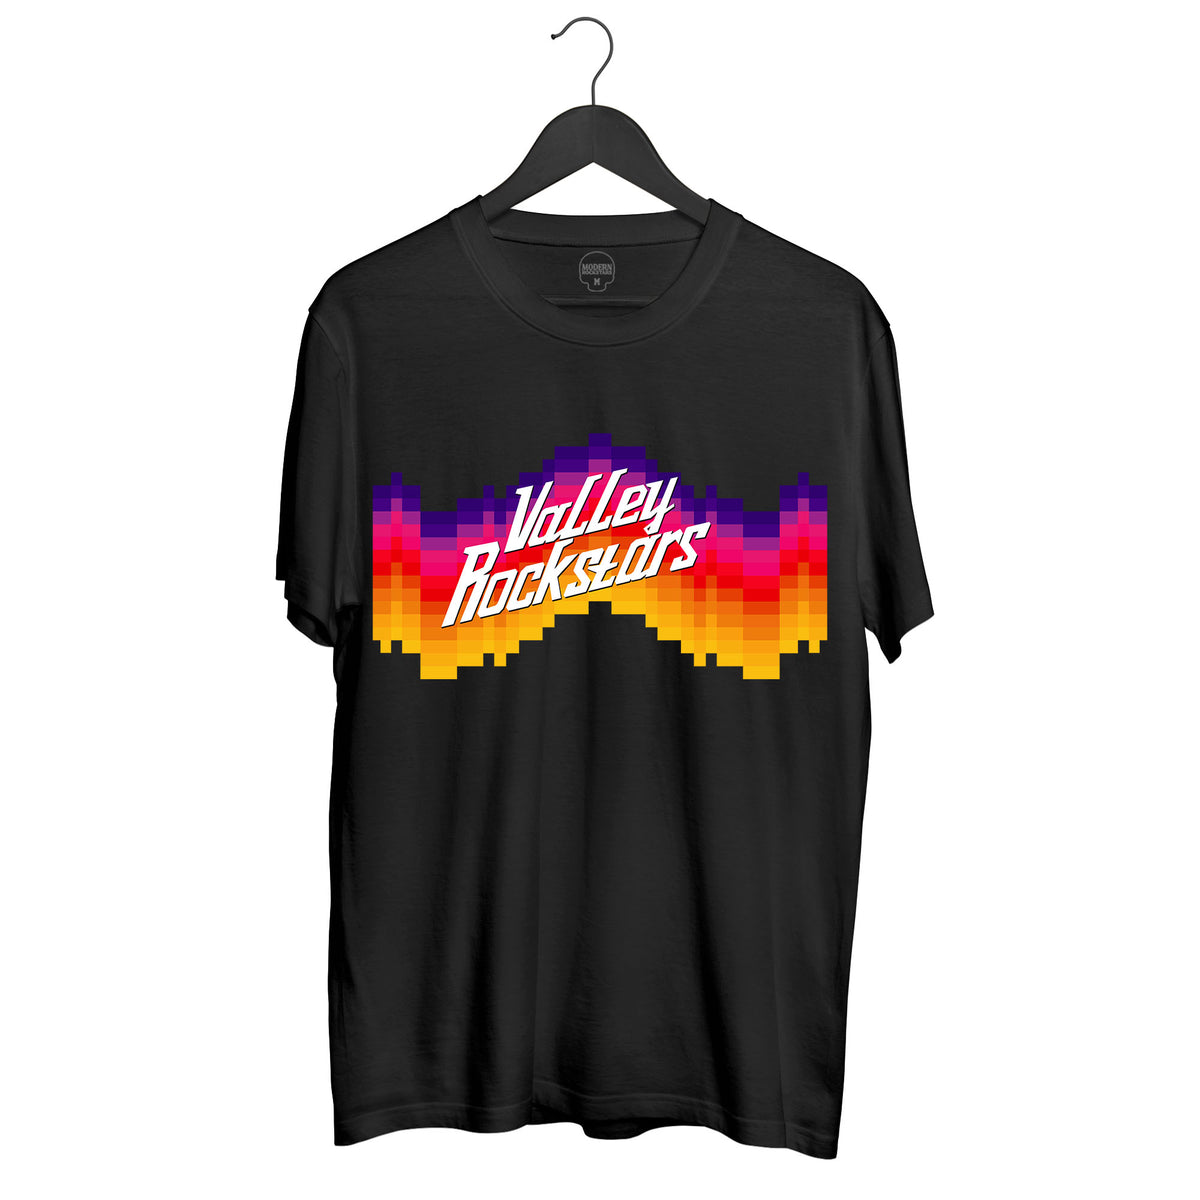 VALLEY ROCKSTARS T-shirt - Modern Rockstars